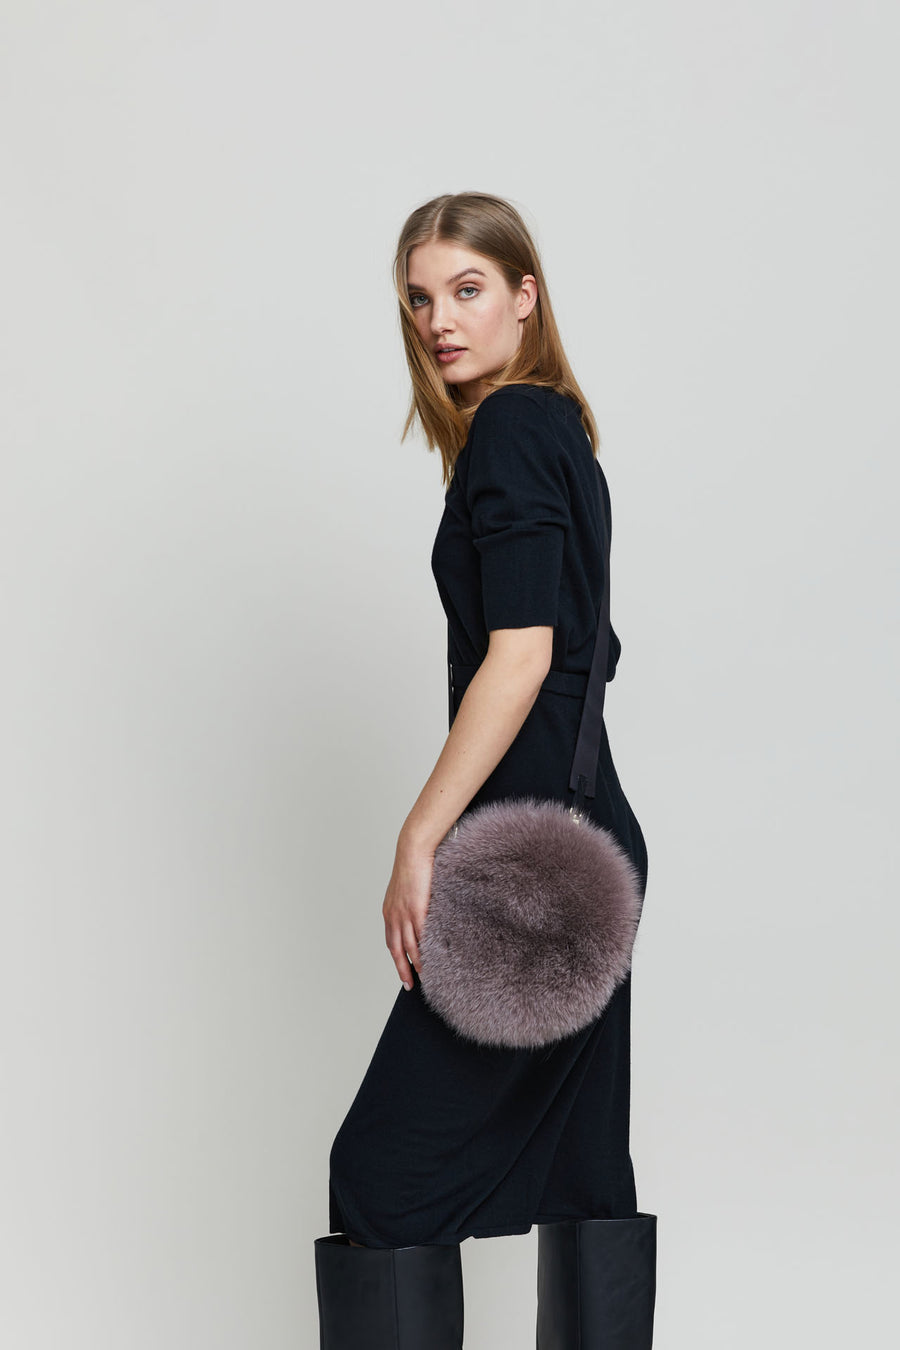 Lady modelling a Round fox fur cross-body and wrist bag.